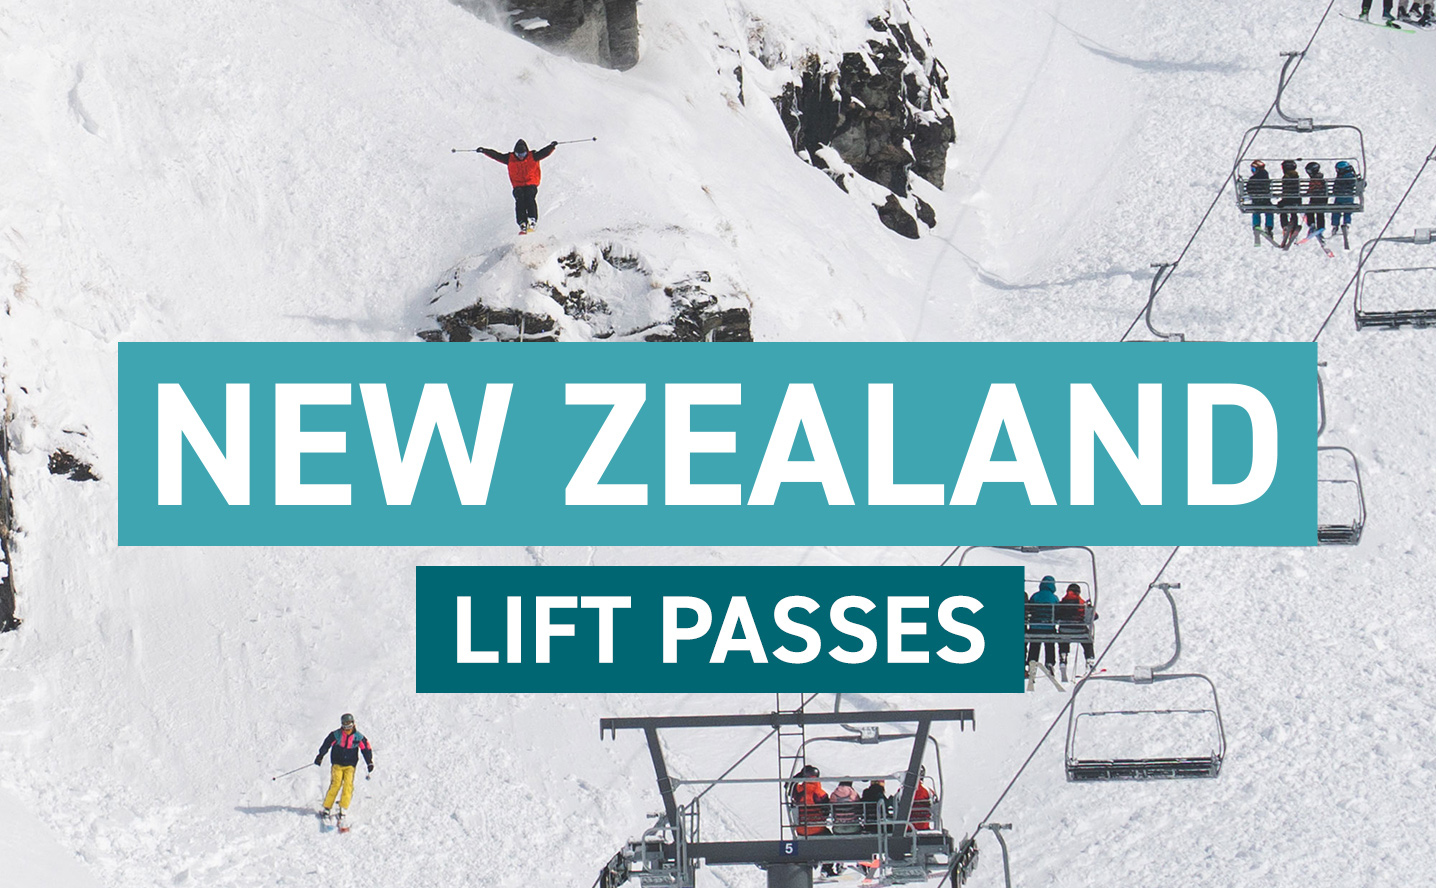 New Zealand Lift Pases